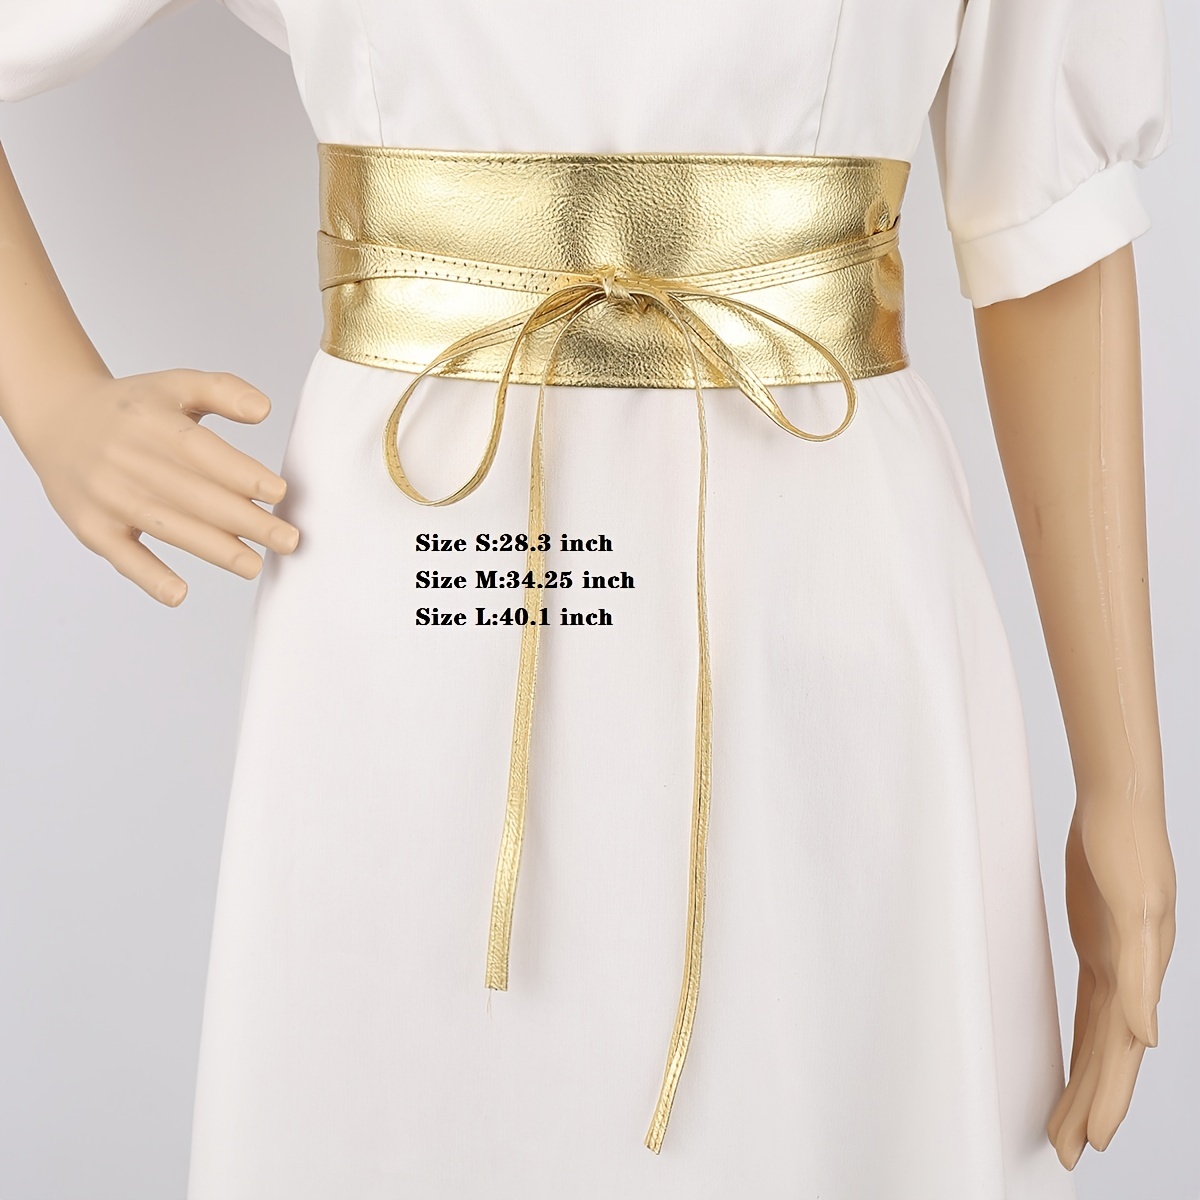  Black Obi belt Real Leather wrap belt Wedding Women's